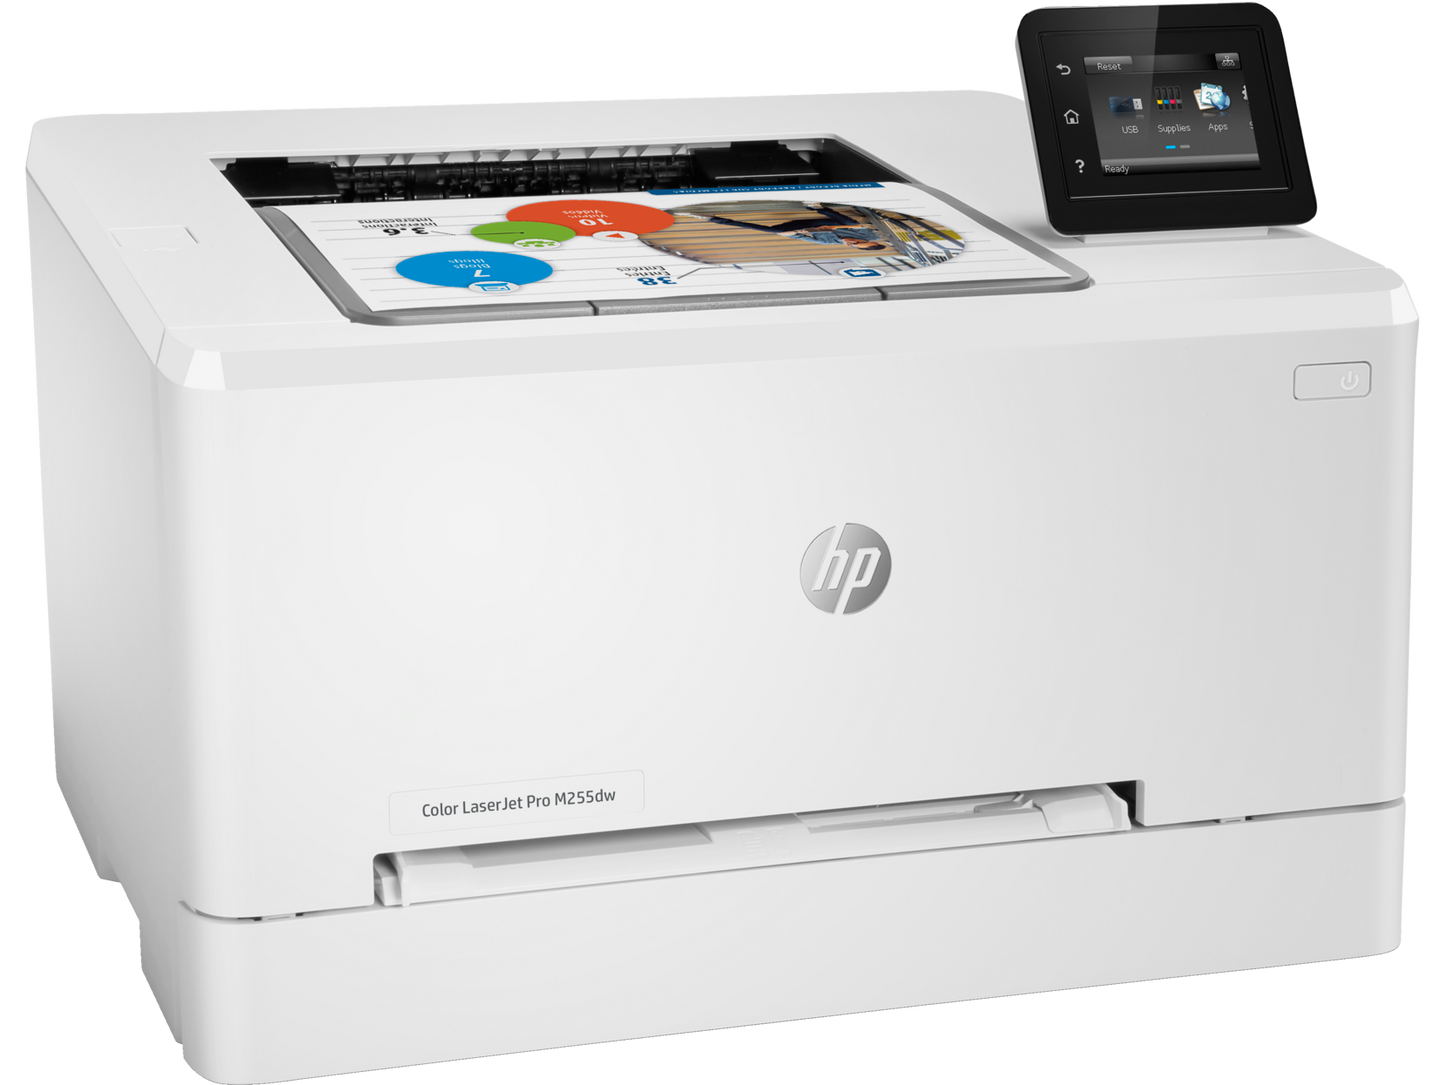 HP Color LaserJet Pro M255dw Wireless Printer